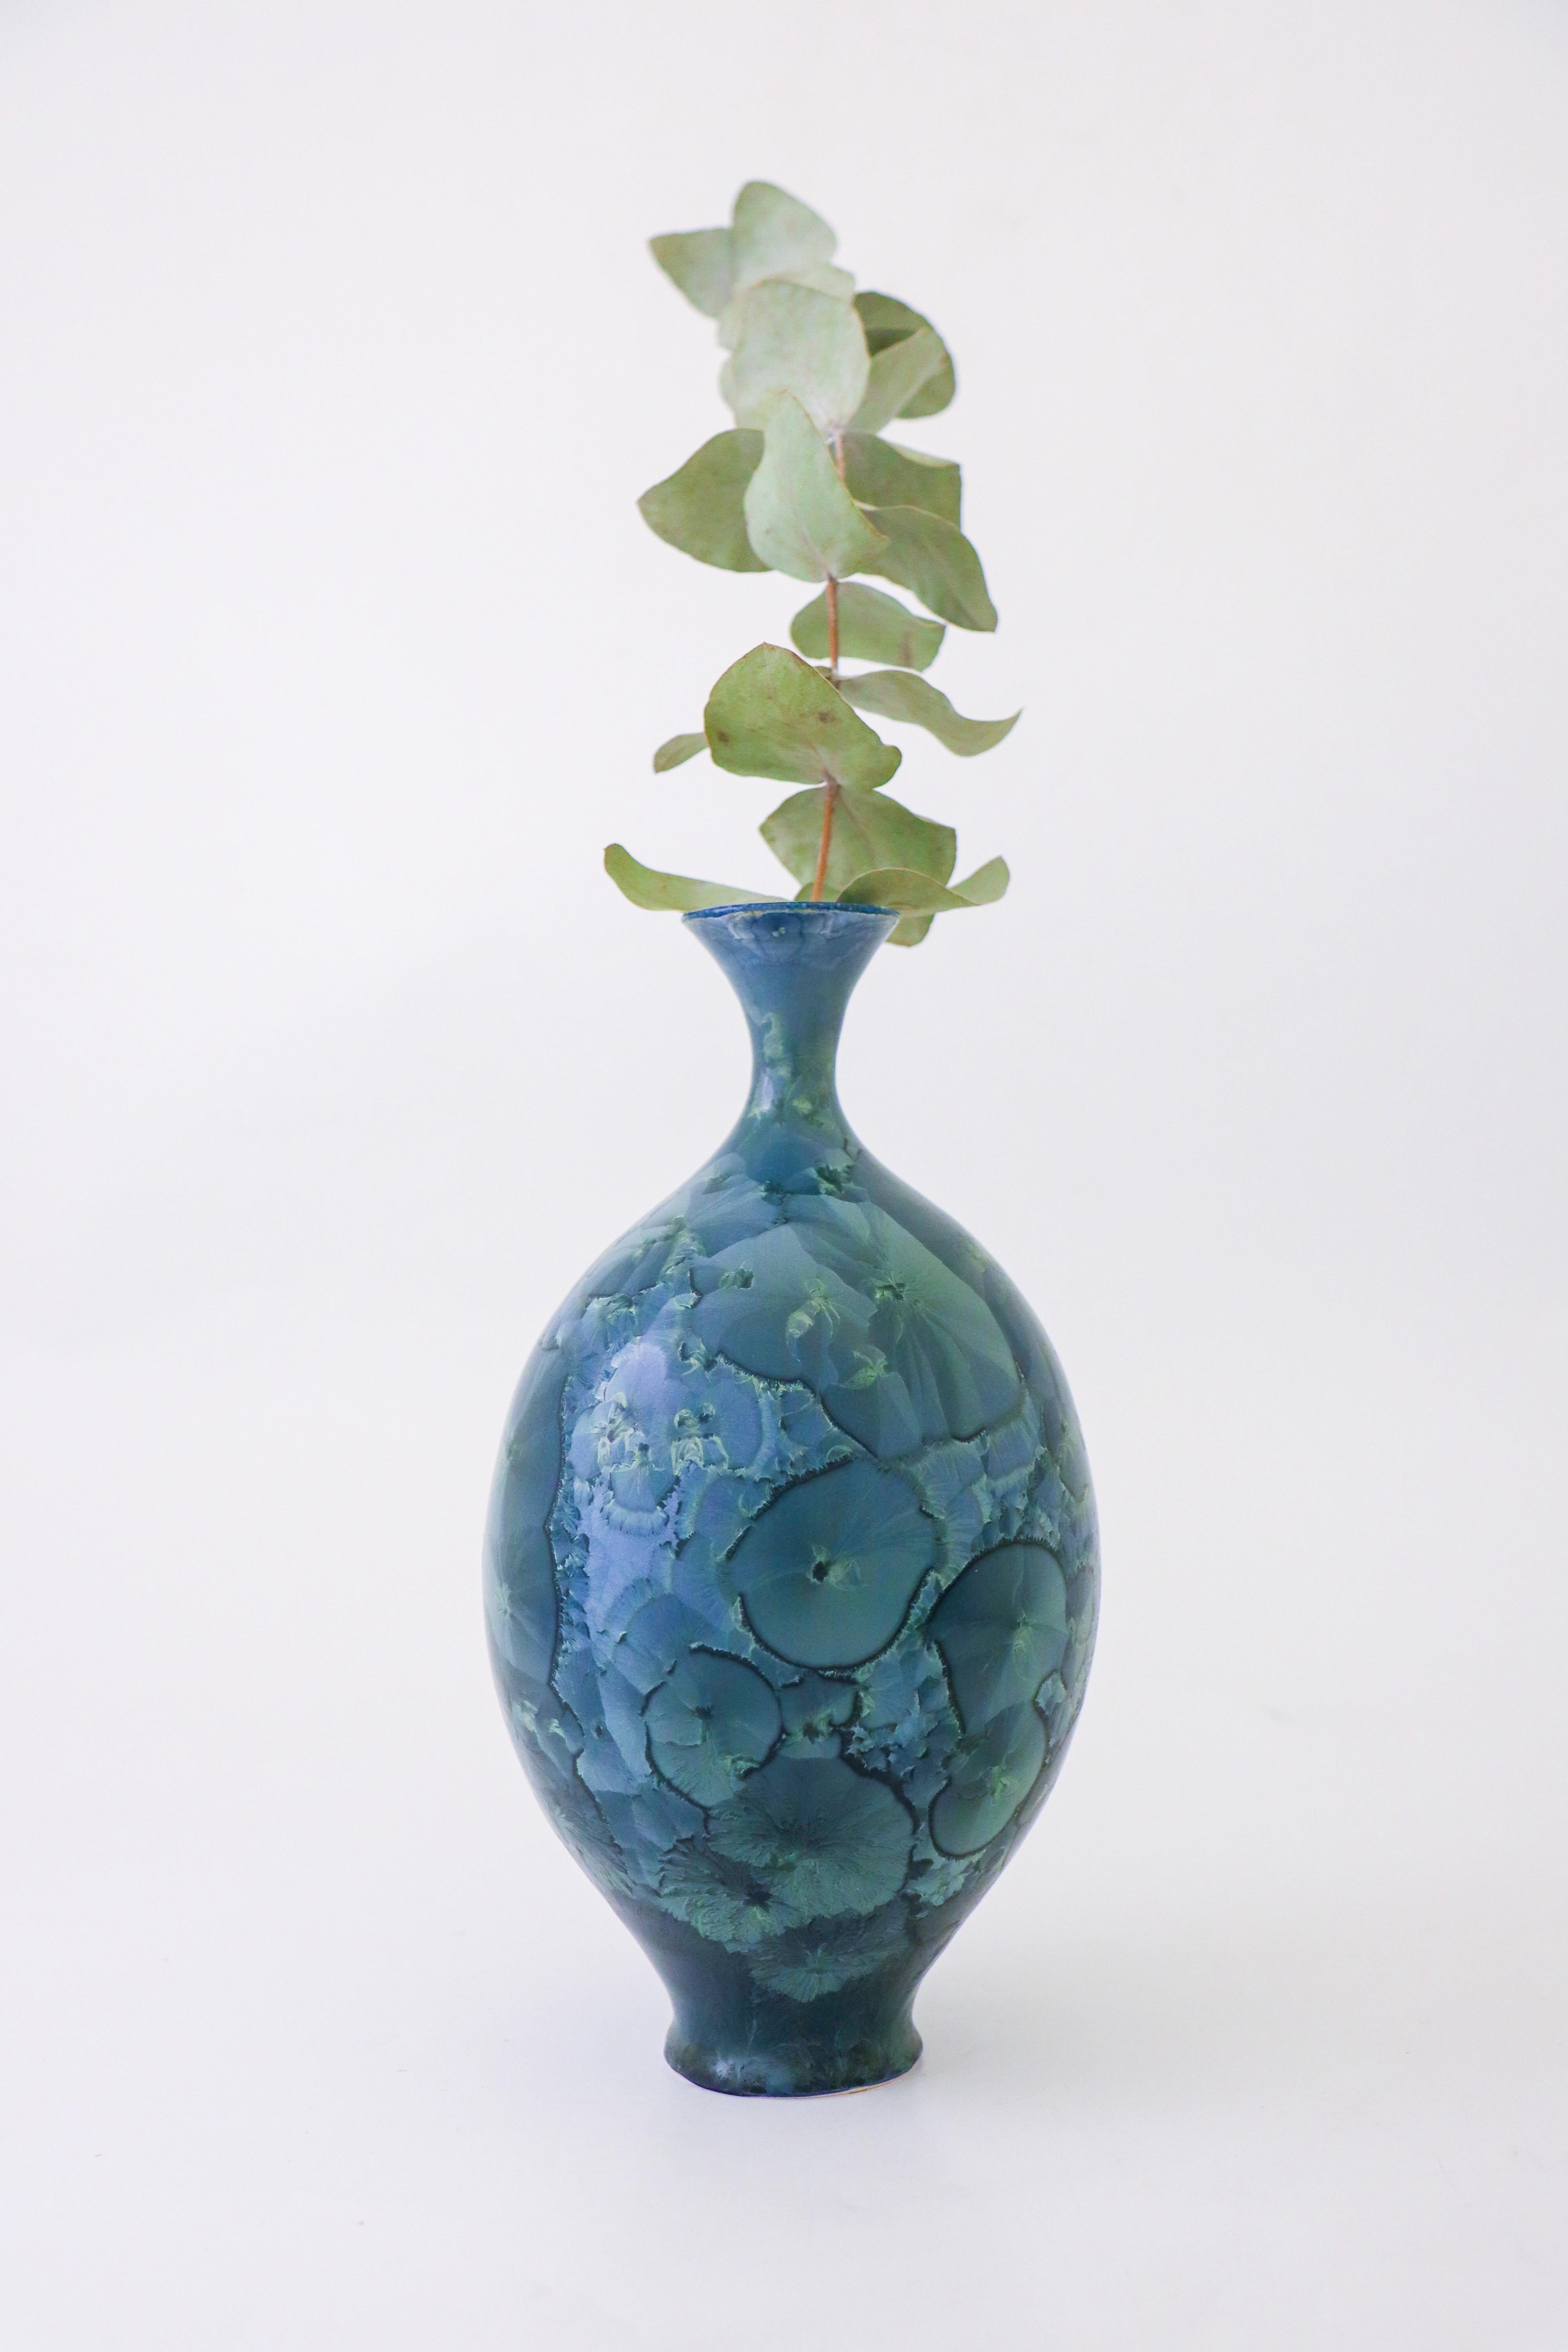 Glazed Isak Isaksson Green Metallic Ceramic Vase Crystalline Glaze Contemporary Artist For Sale